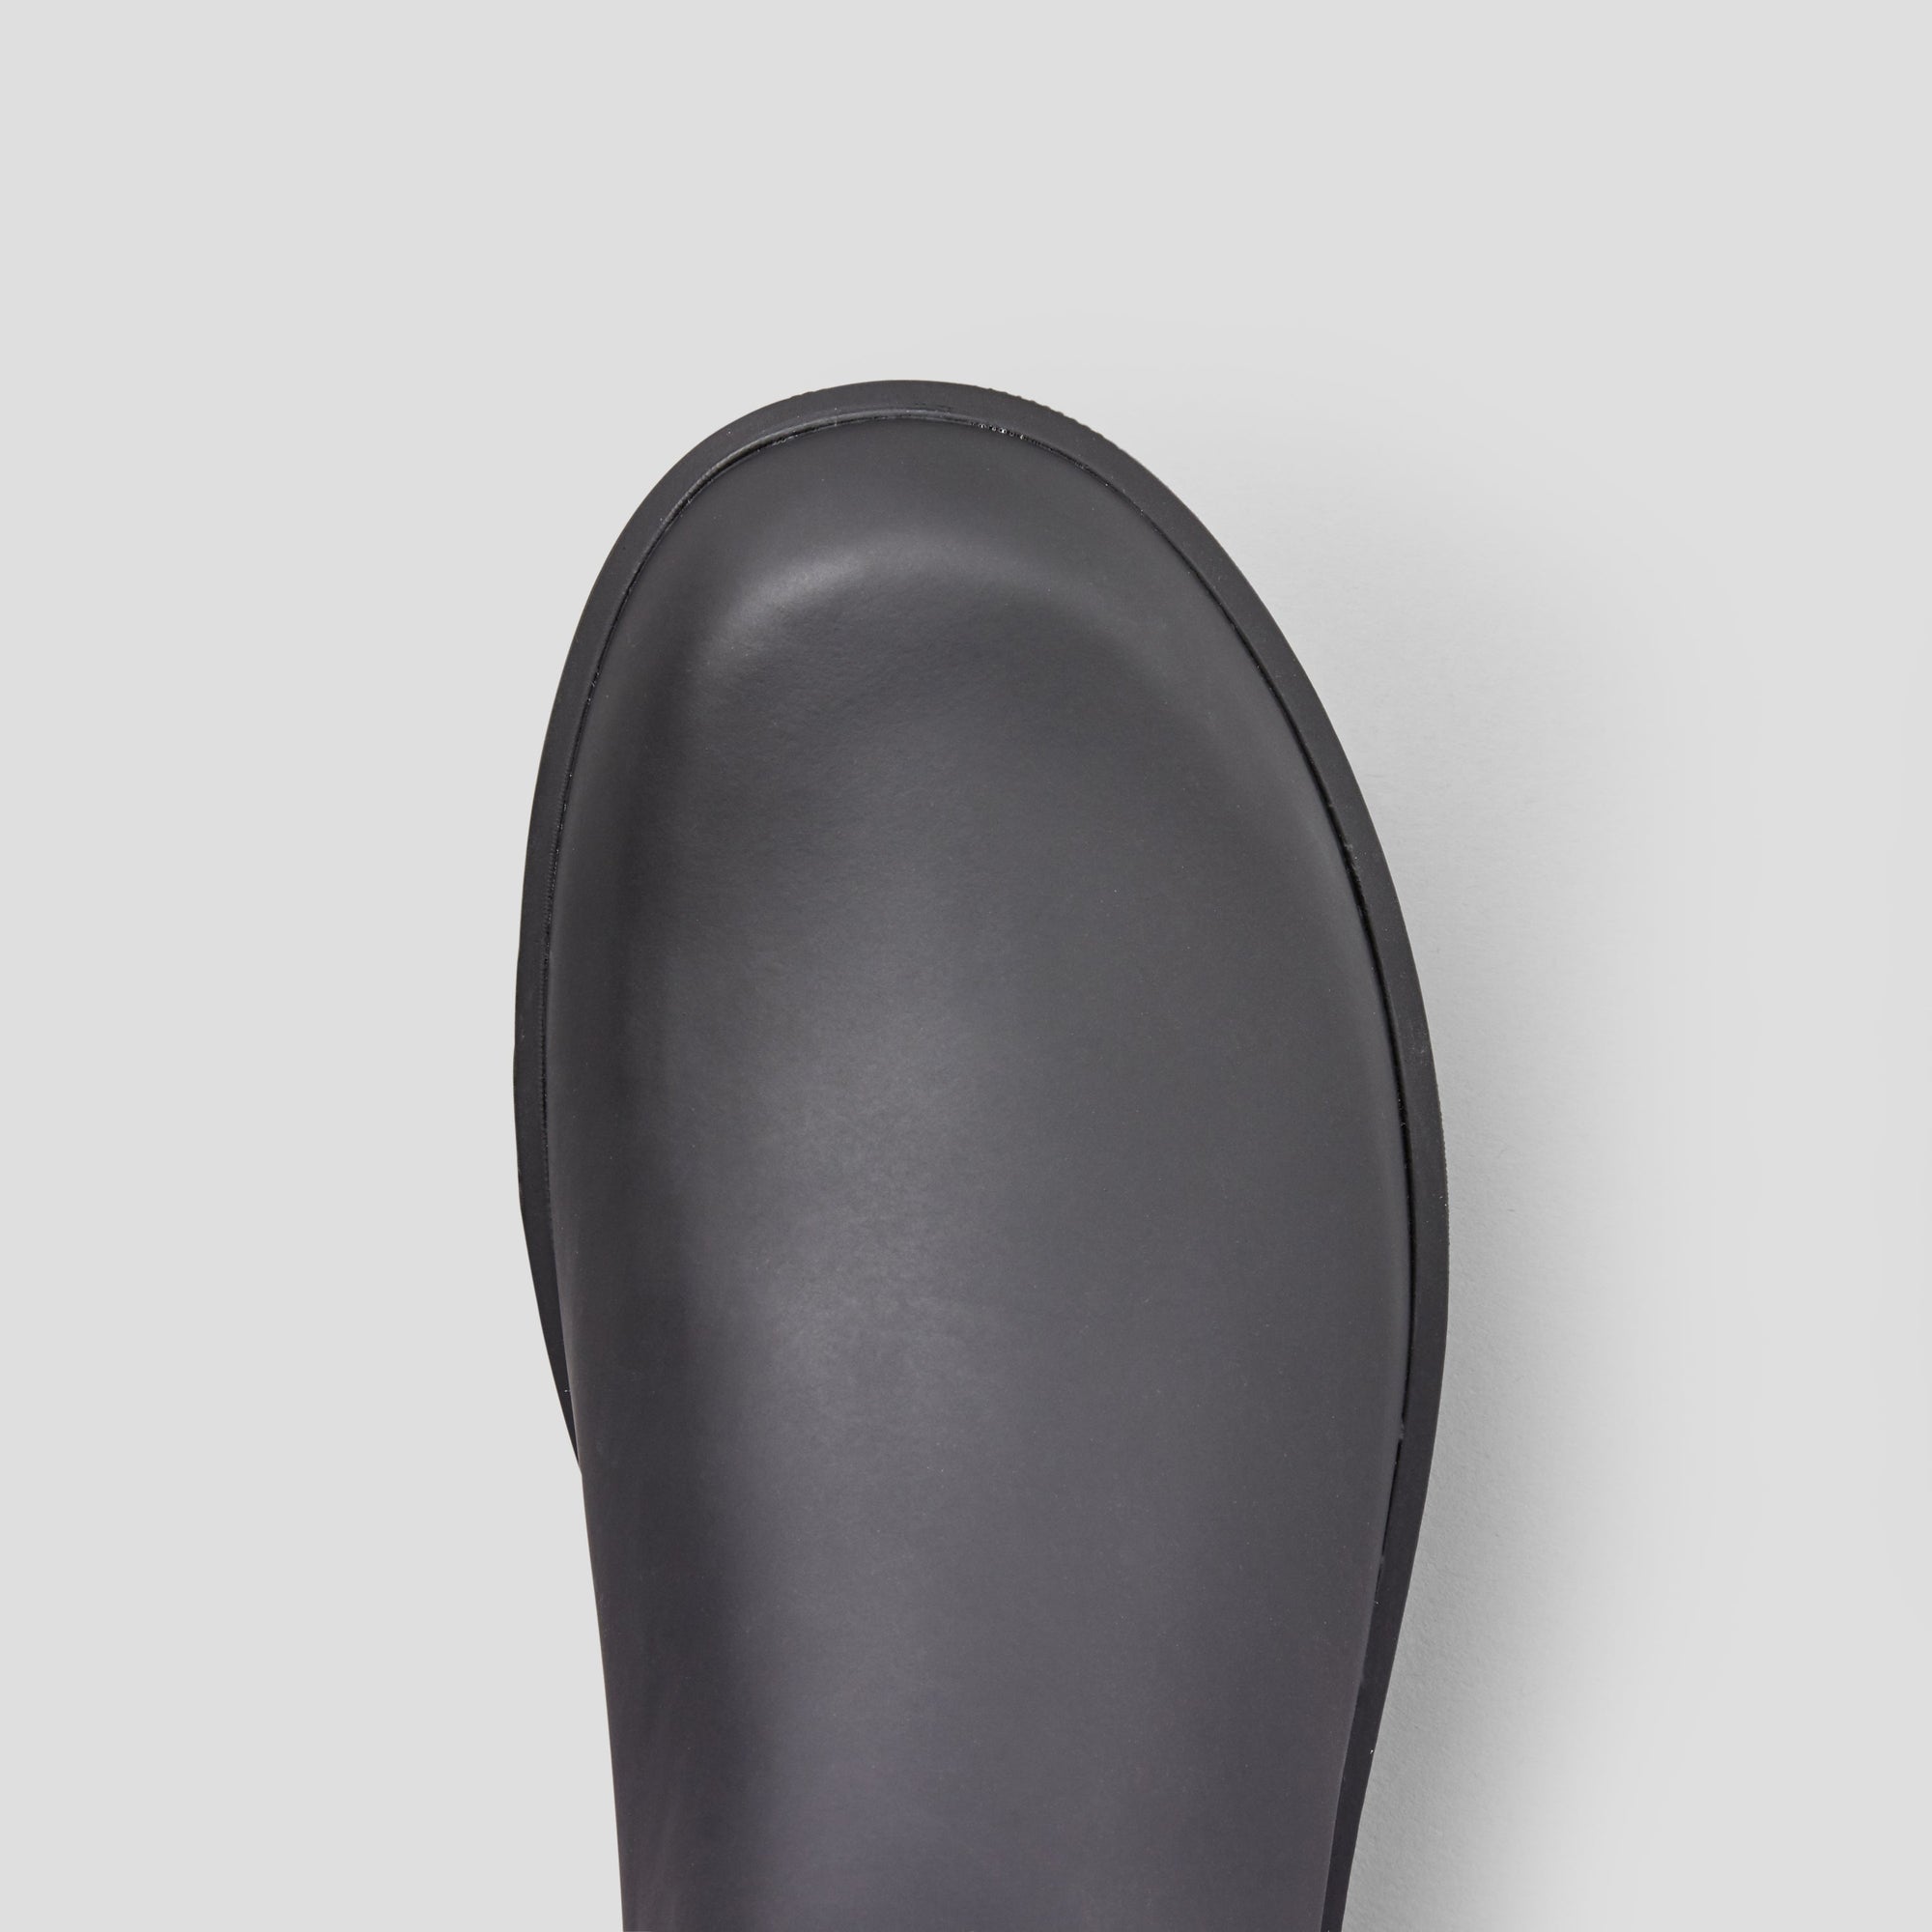 Ignite Rubber Waterproof Boot - Color Black